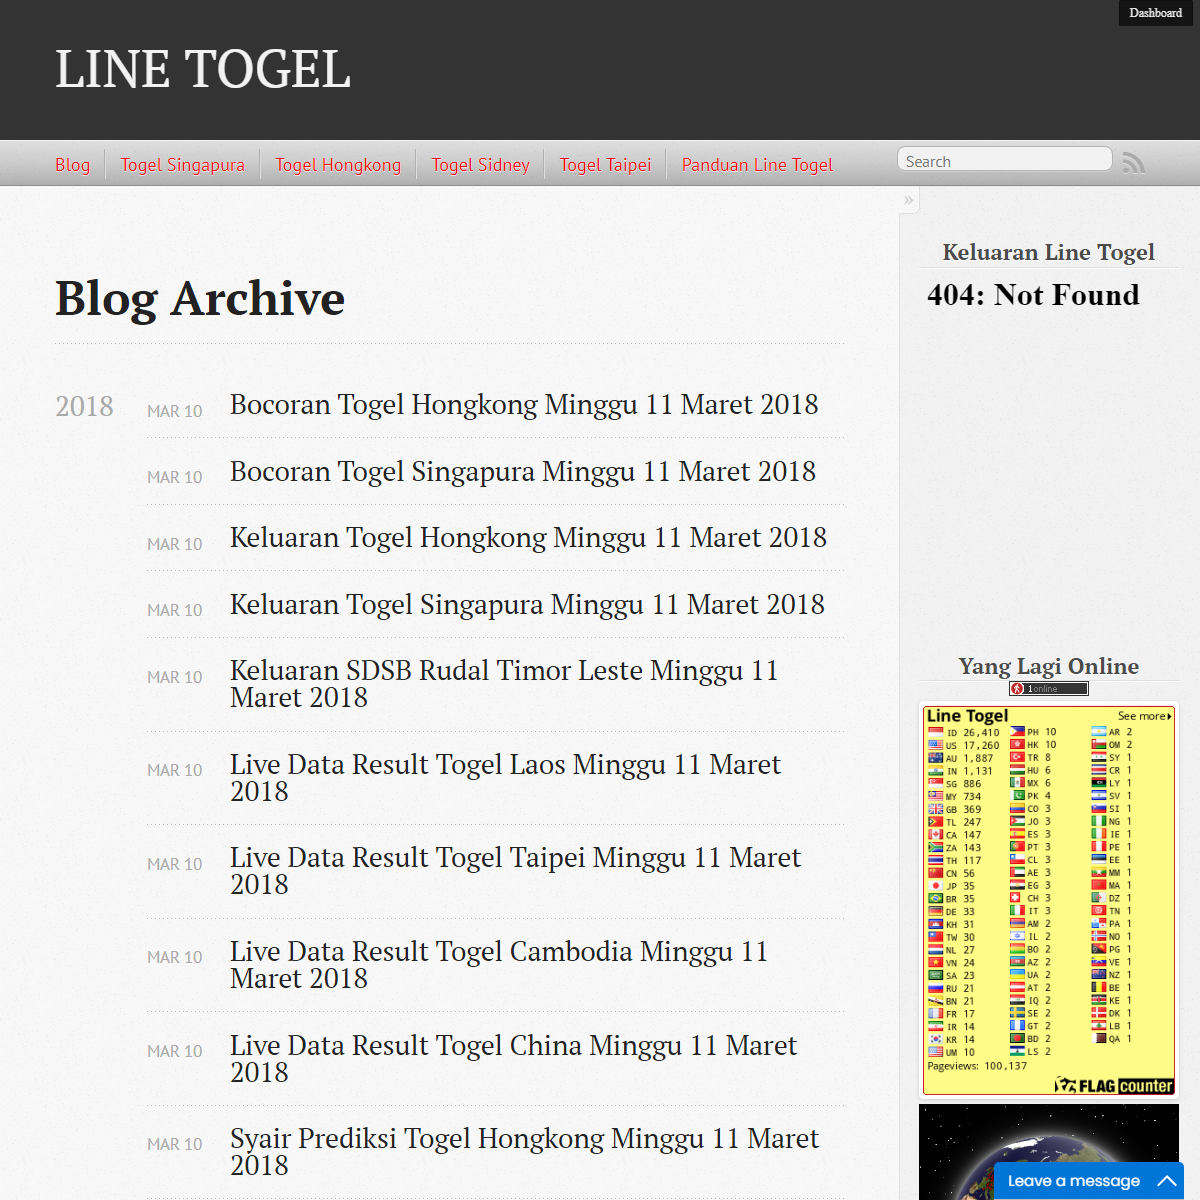 A complete backup of http://linetogel.logdown.com/archives